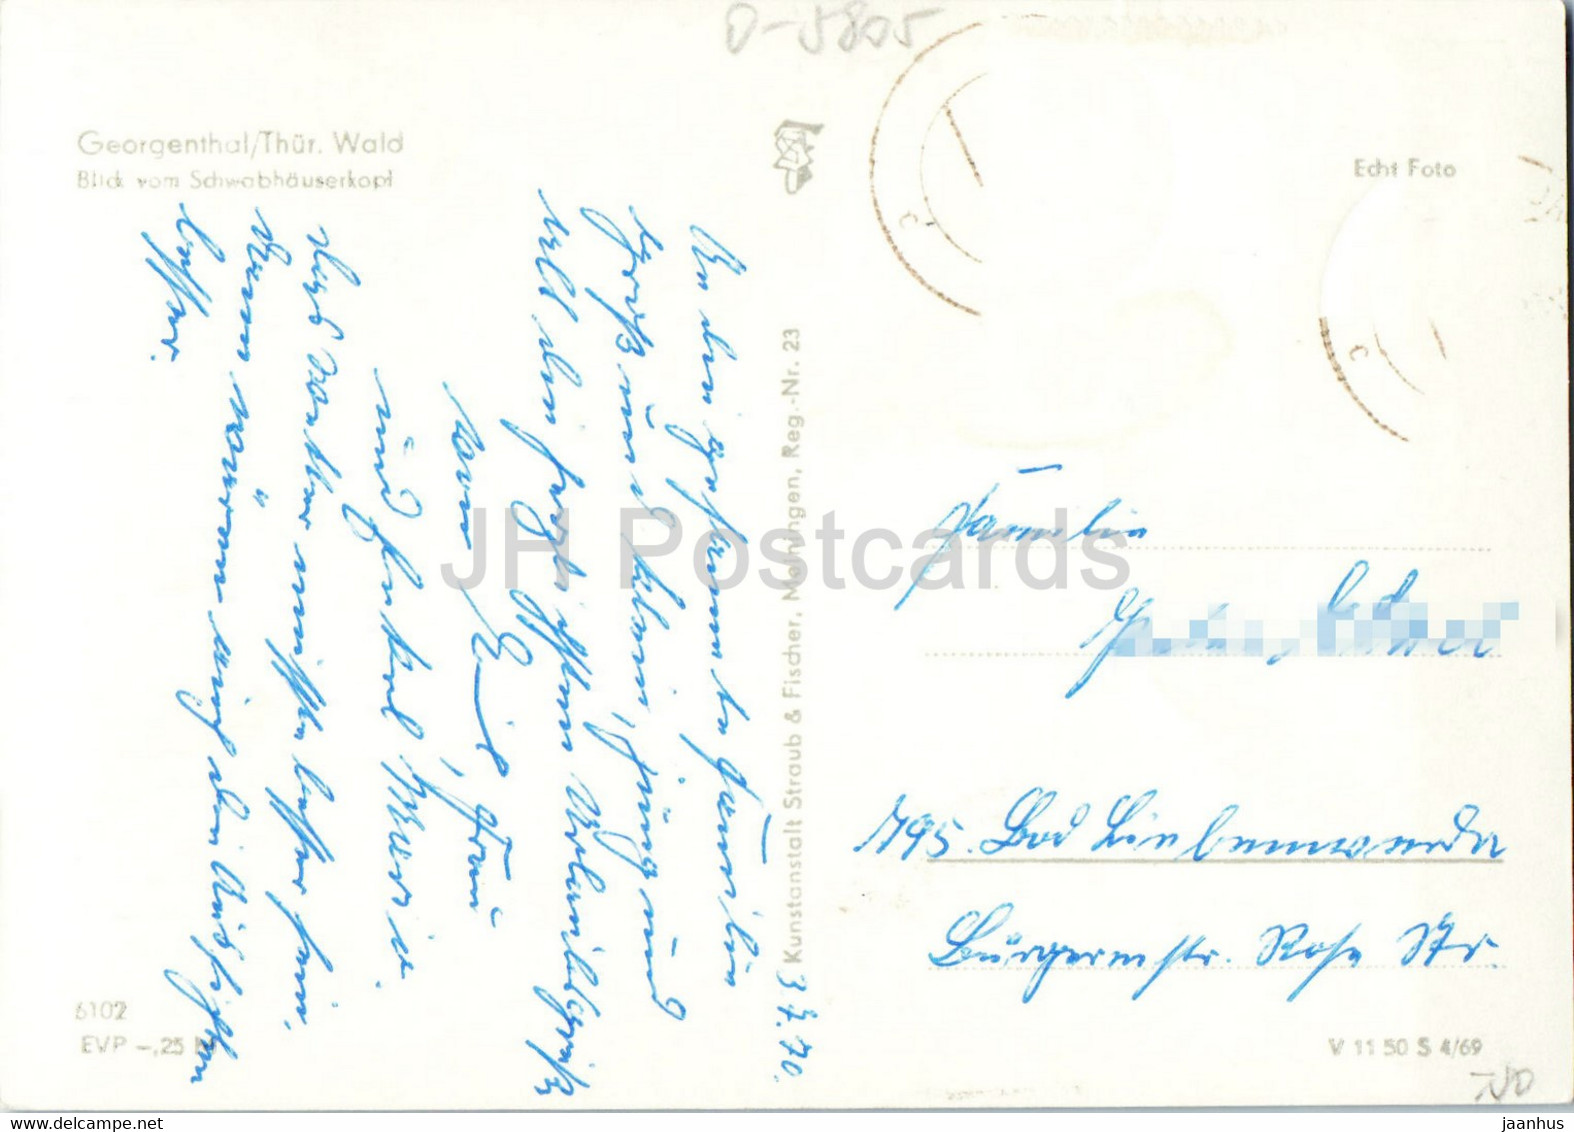 Georgenthal - Thur Wald - Blick Vom Schwabhauserkopf - Old Postcard - 1970 - Germany DDR - Used - Georgenthal